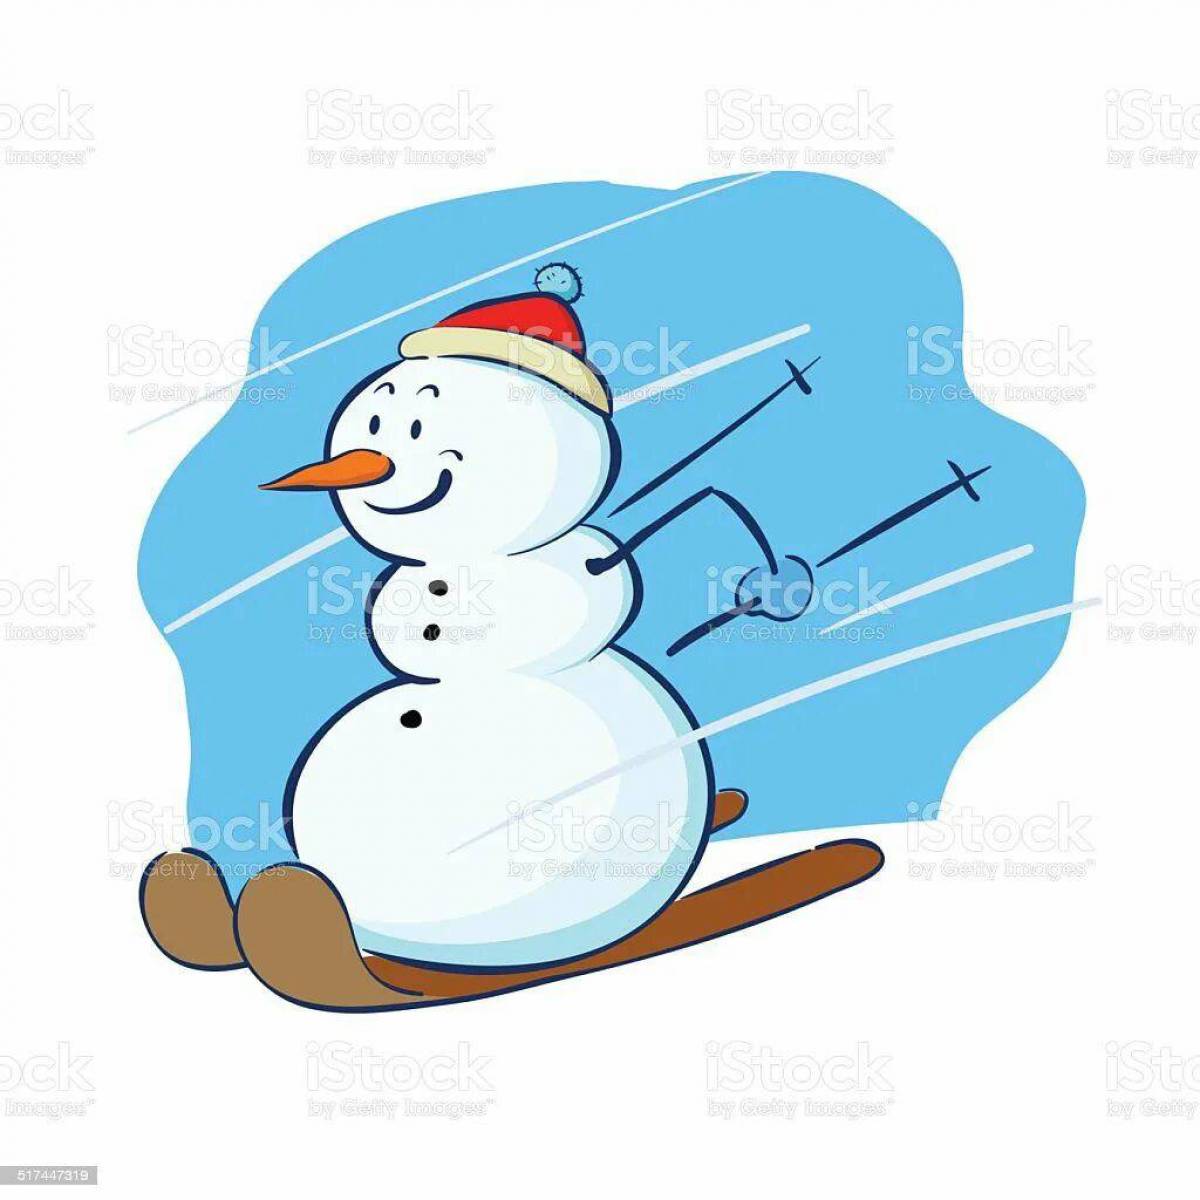 Снеговик на лыжах #19